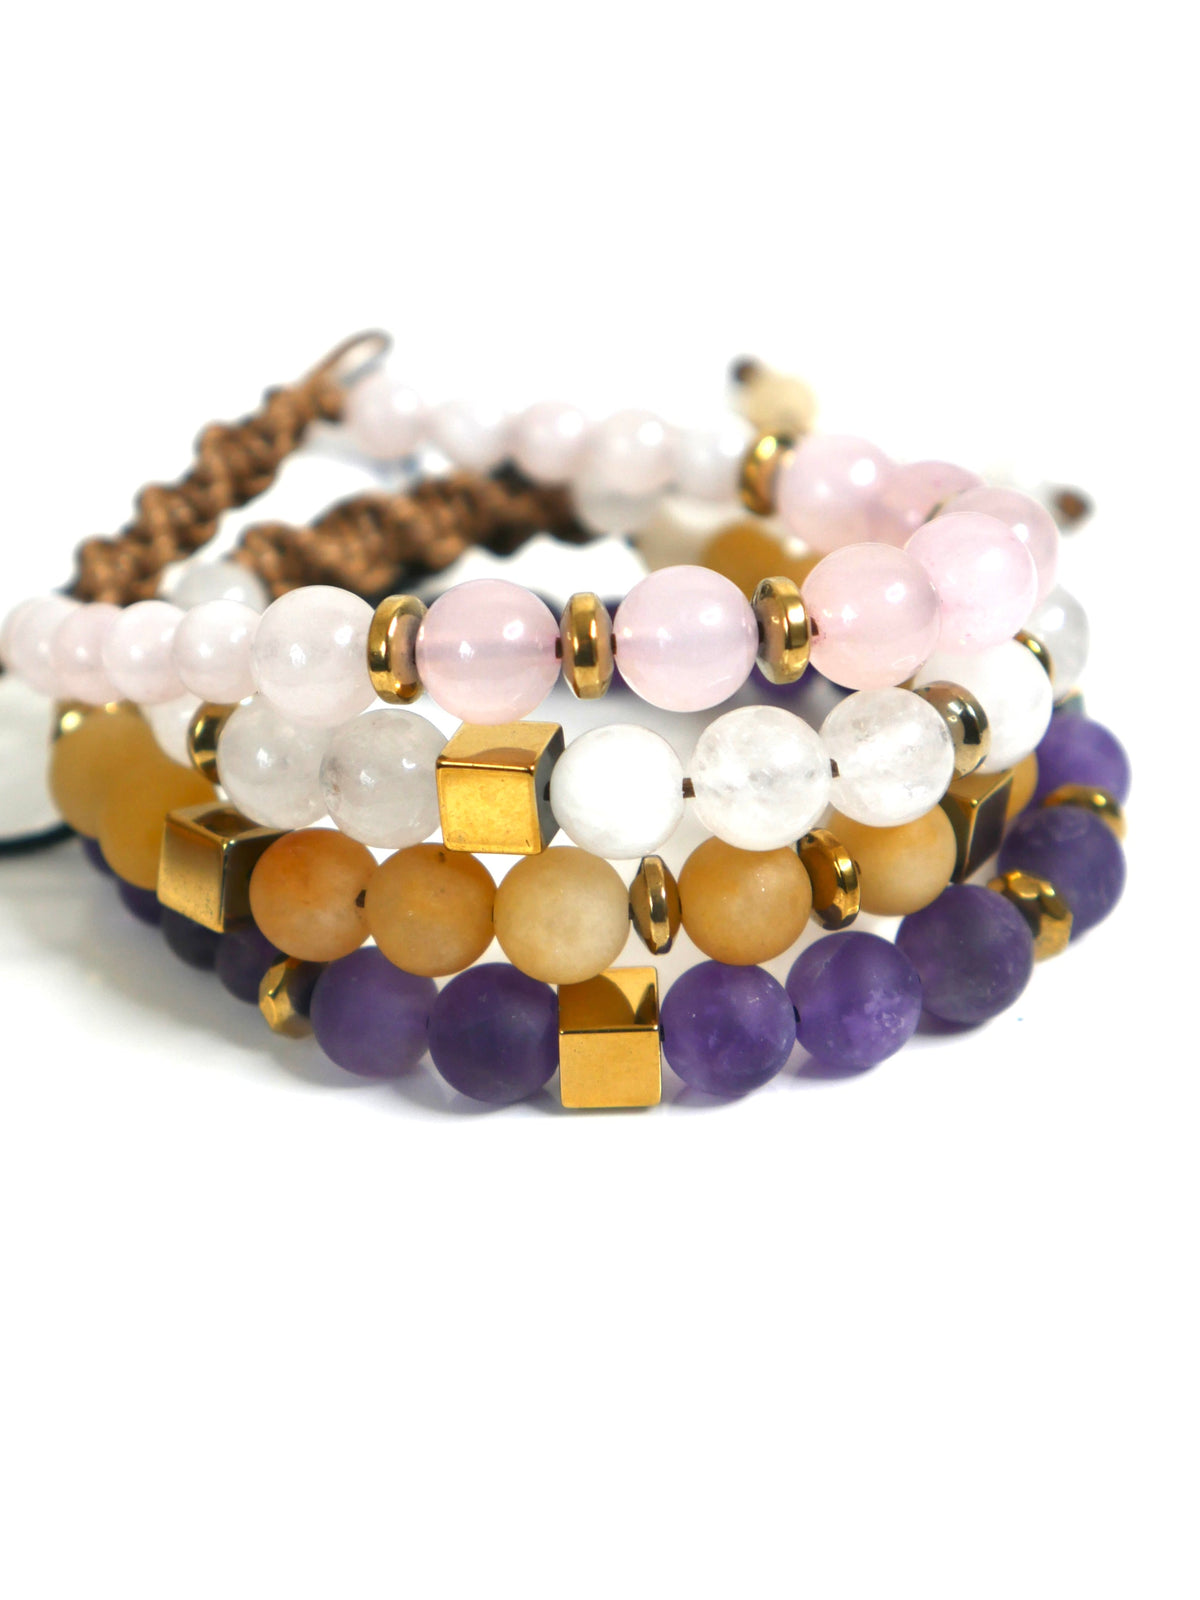 Gemstone Bracelets, Handmade Natural Stone Pull Adjustable Burzan Bracelets